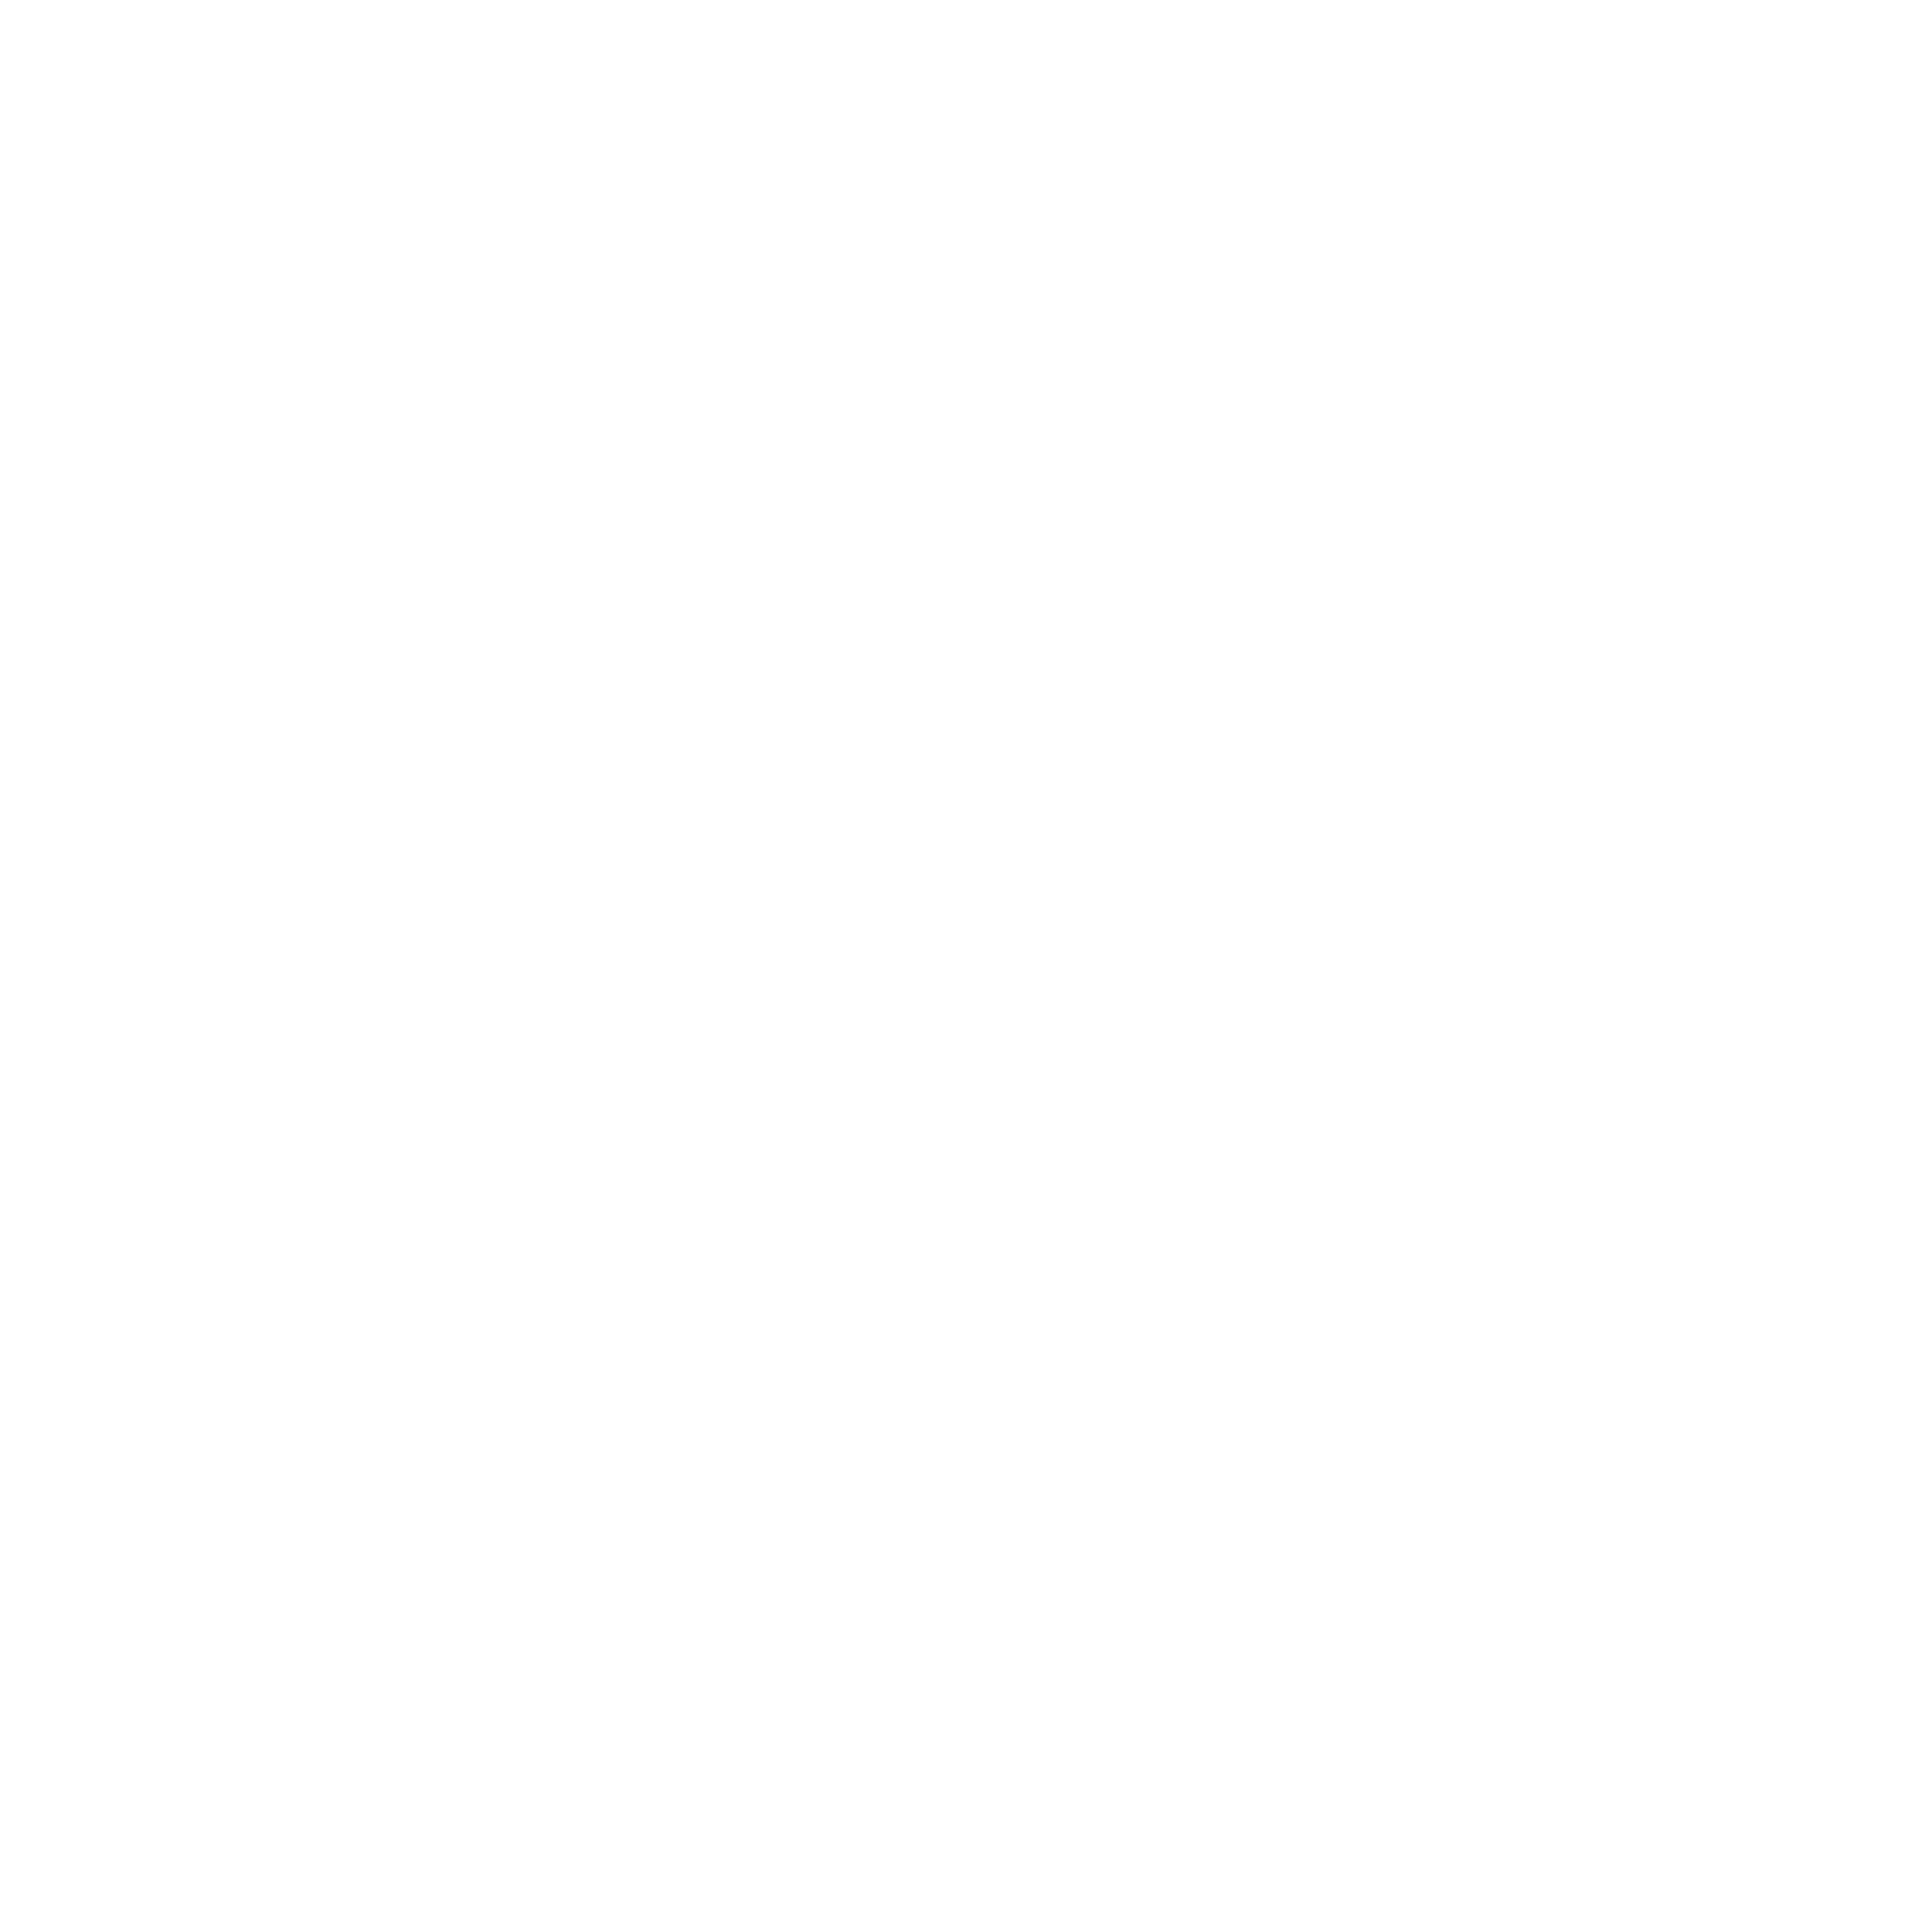 Timotei Logo - Timotei Logo PNG Transparent & SVG Vector